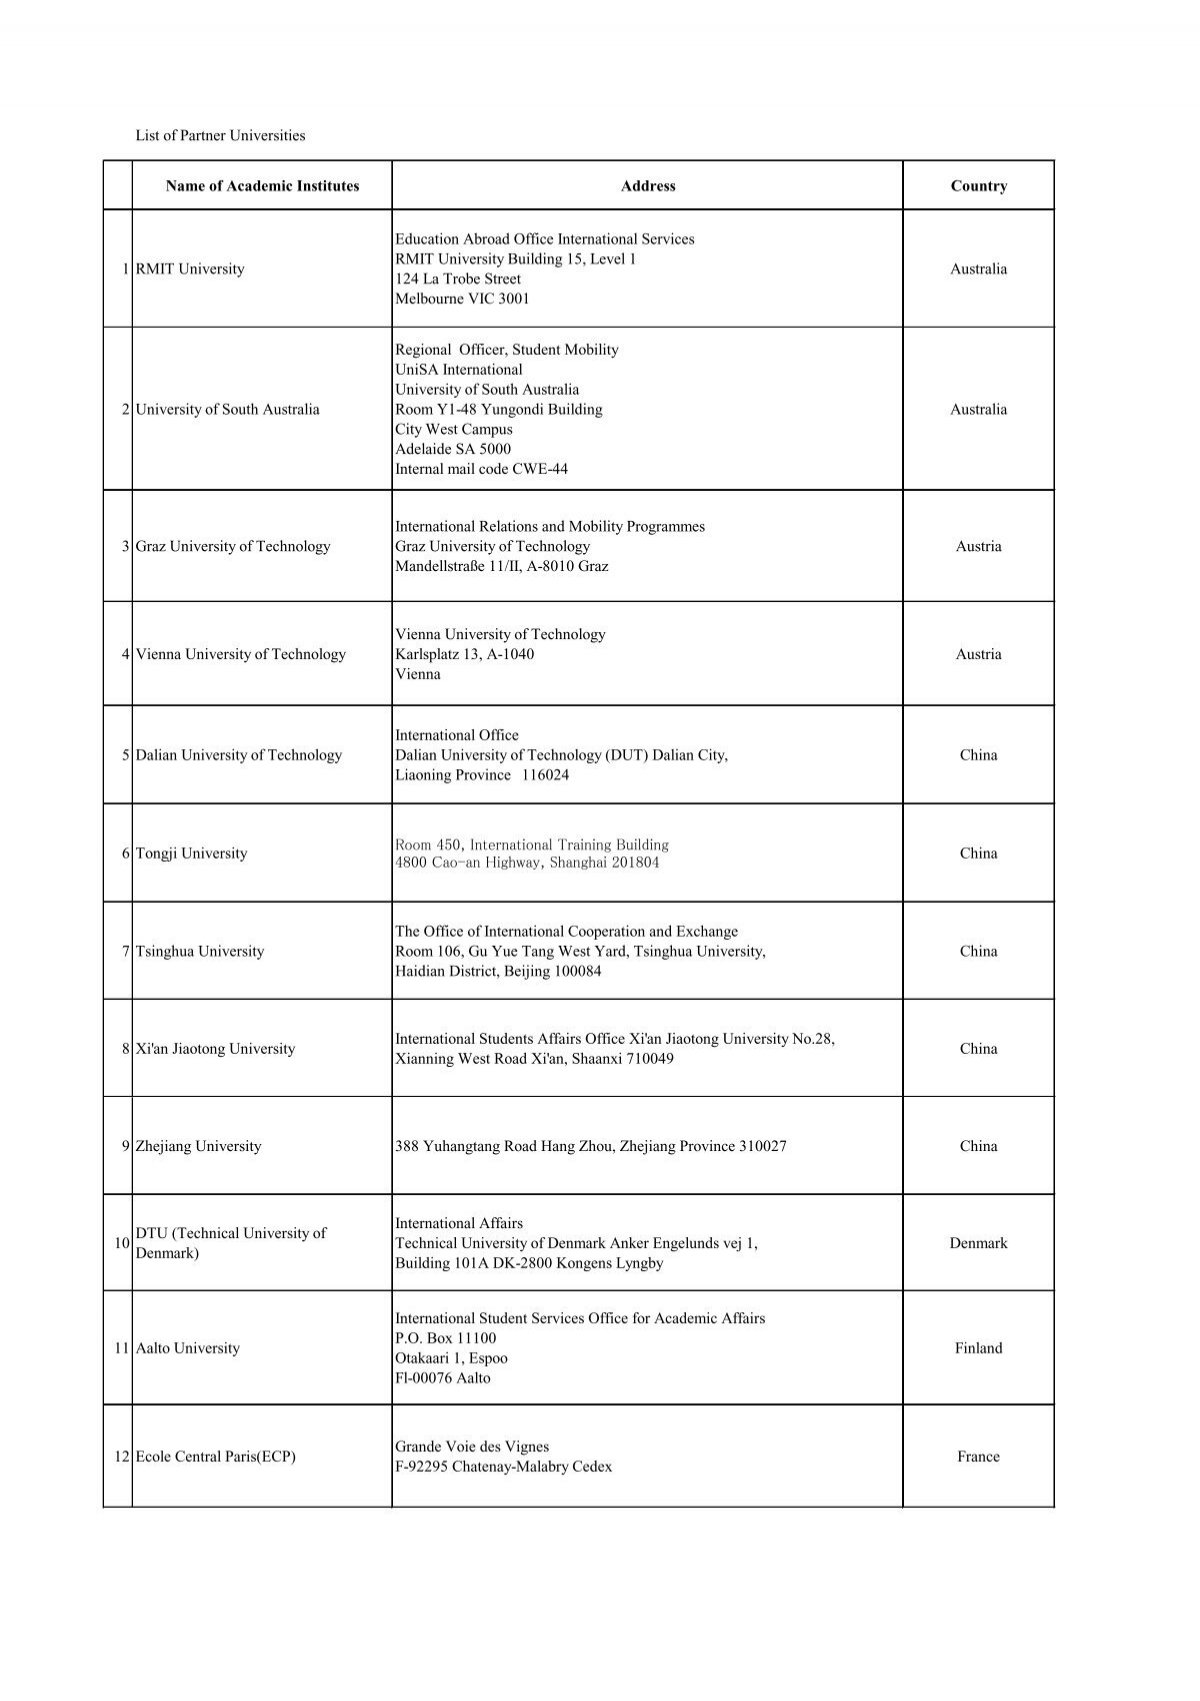 List Of Partner Universities Name Of Academic Institutes Address